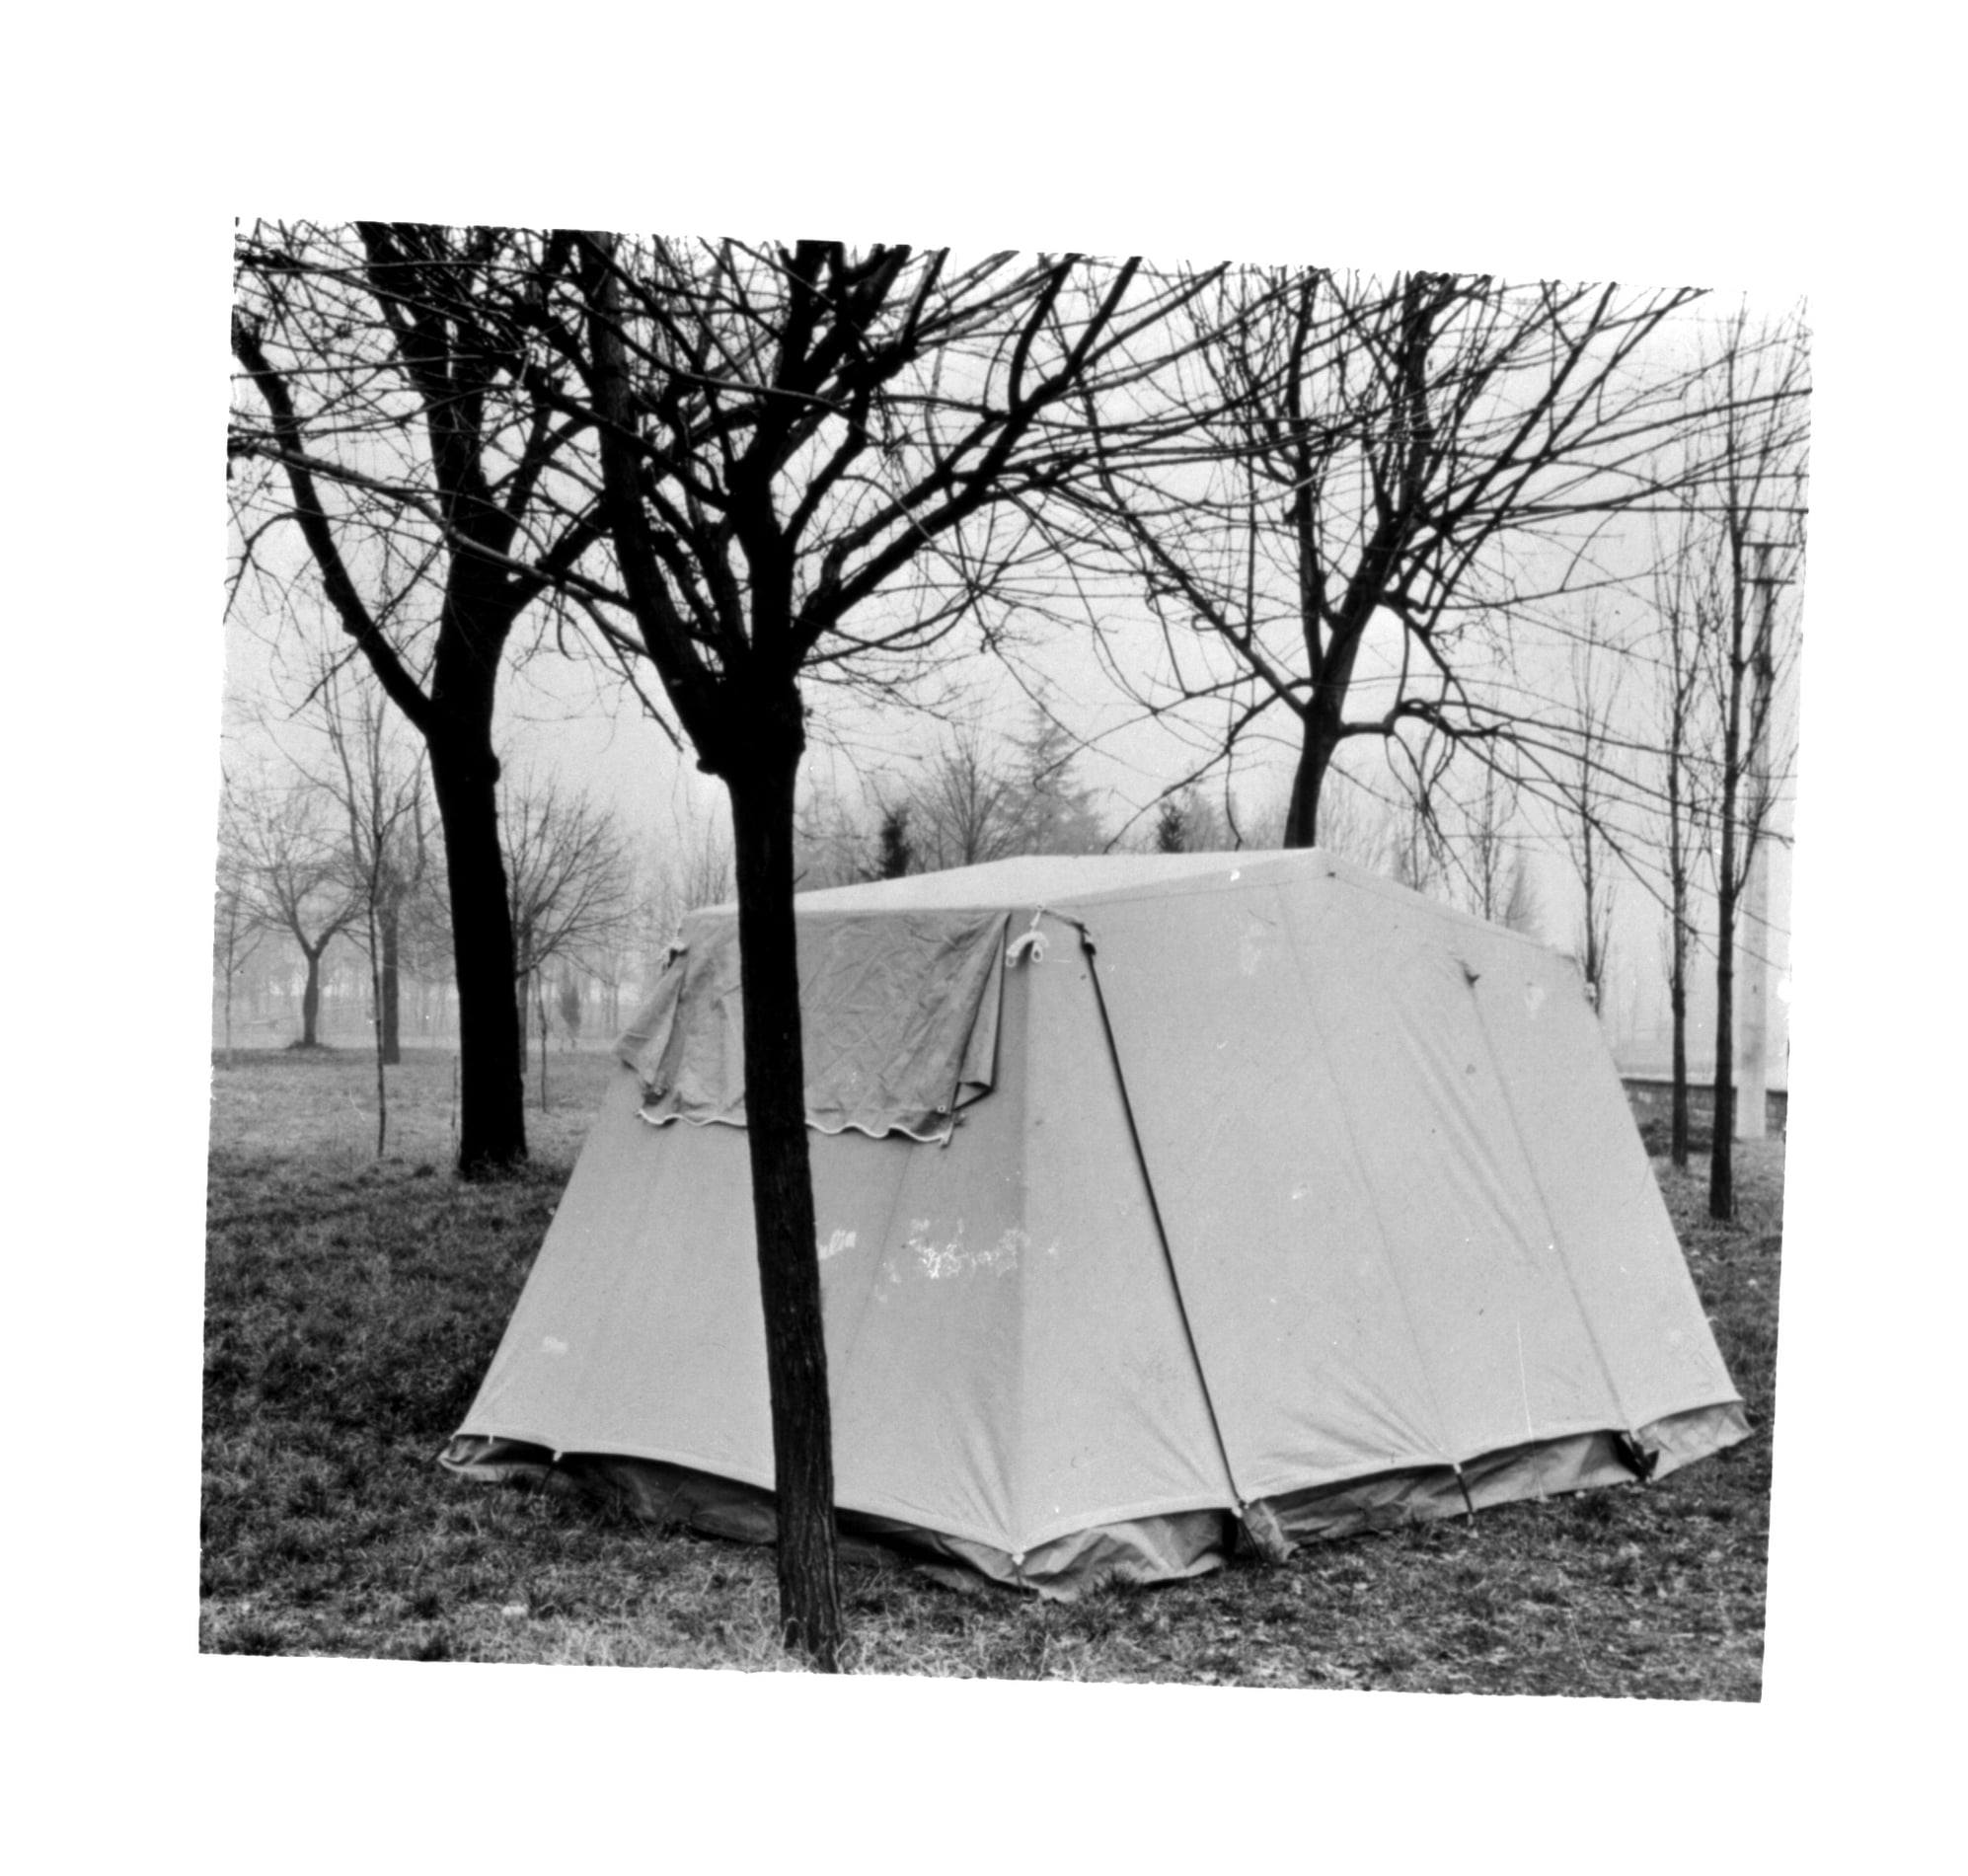 Tenda Da Campeggio [Julia] - ADI Design Museum